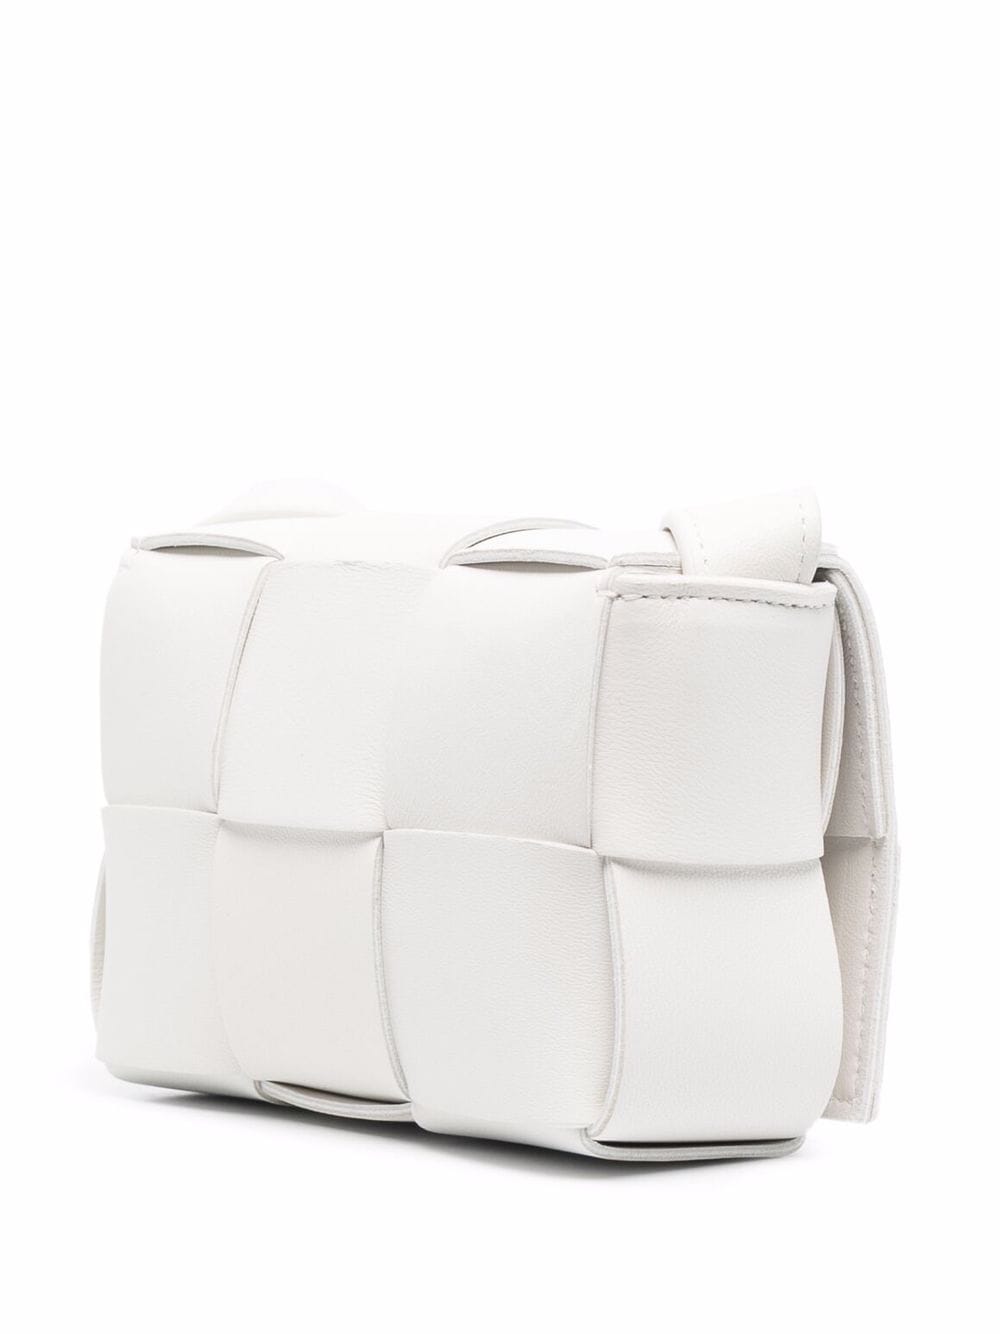 Bottega Veneta® Mini Cassette Tote Bag in Travertine. Shop online now.